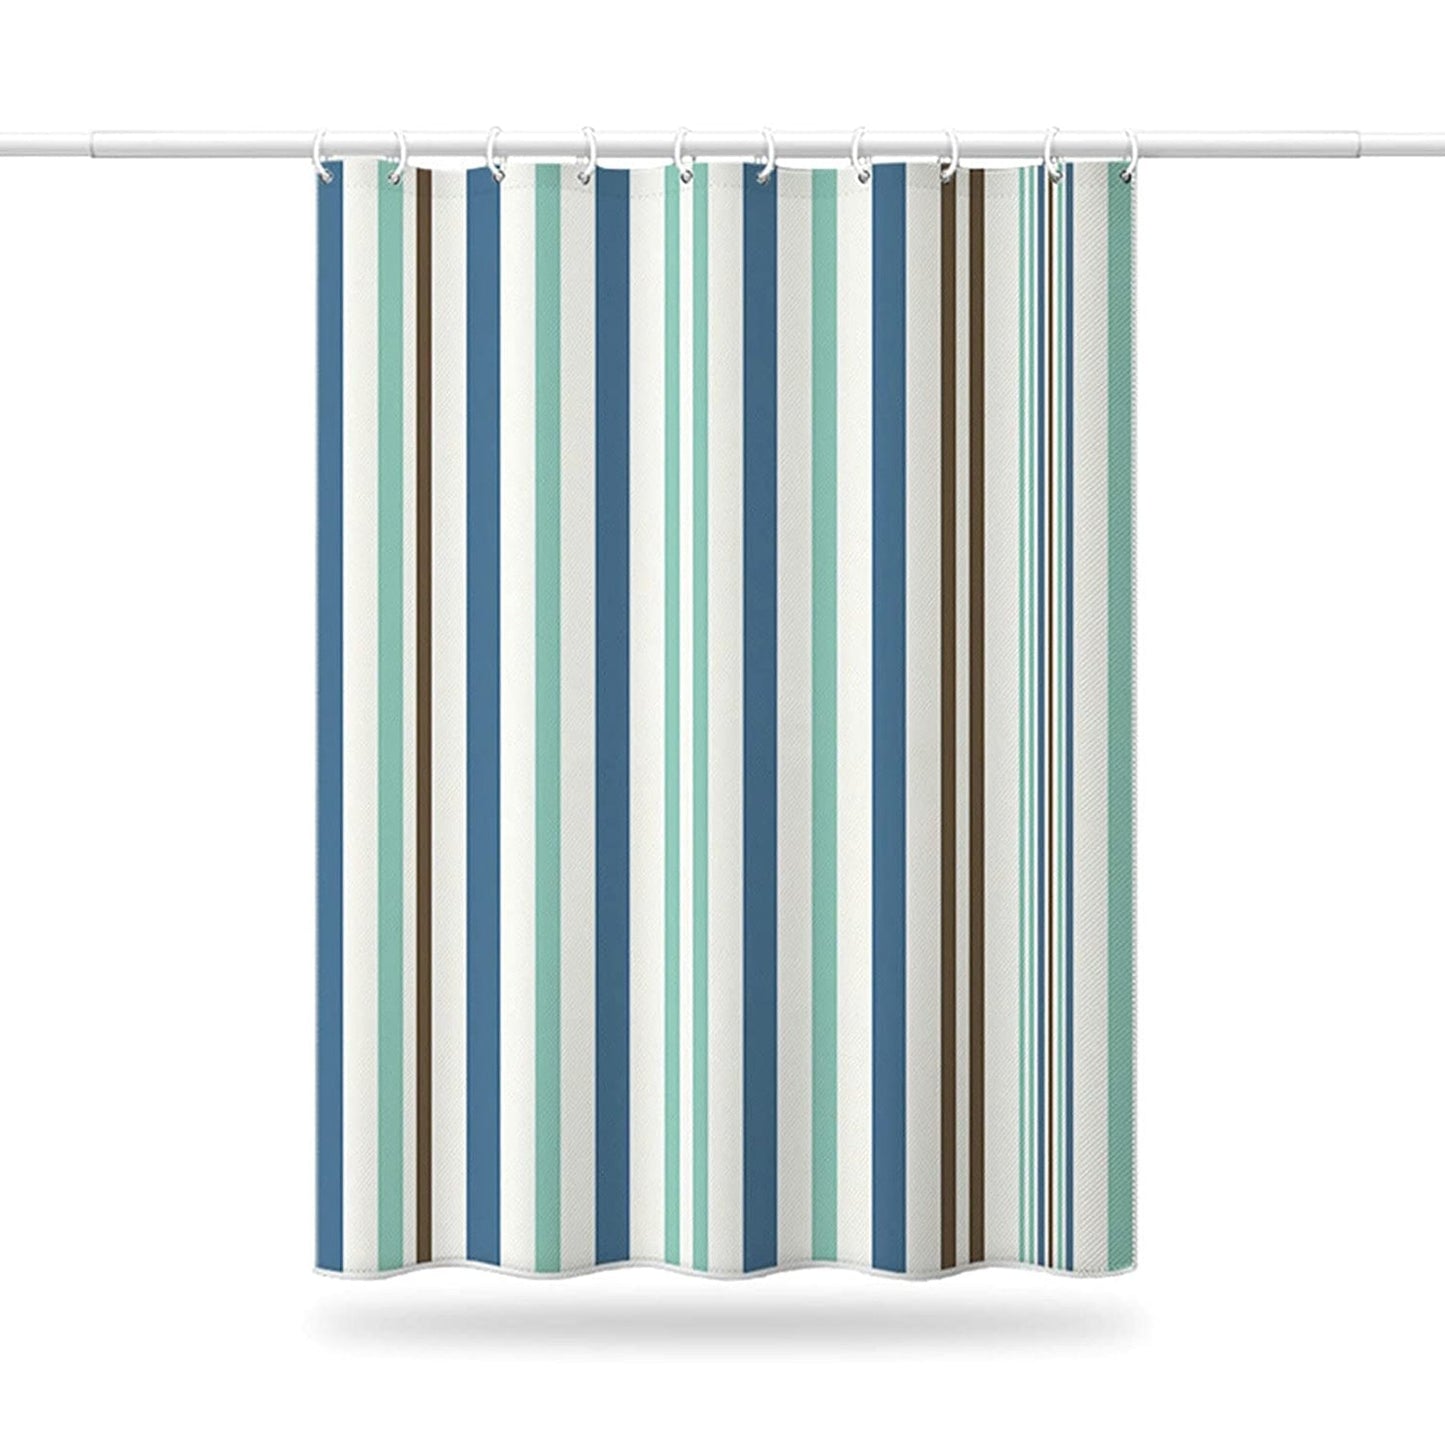 6730 Bright Vertical Stripes in The Shower Curtain (150x200cm) DeoDap